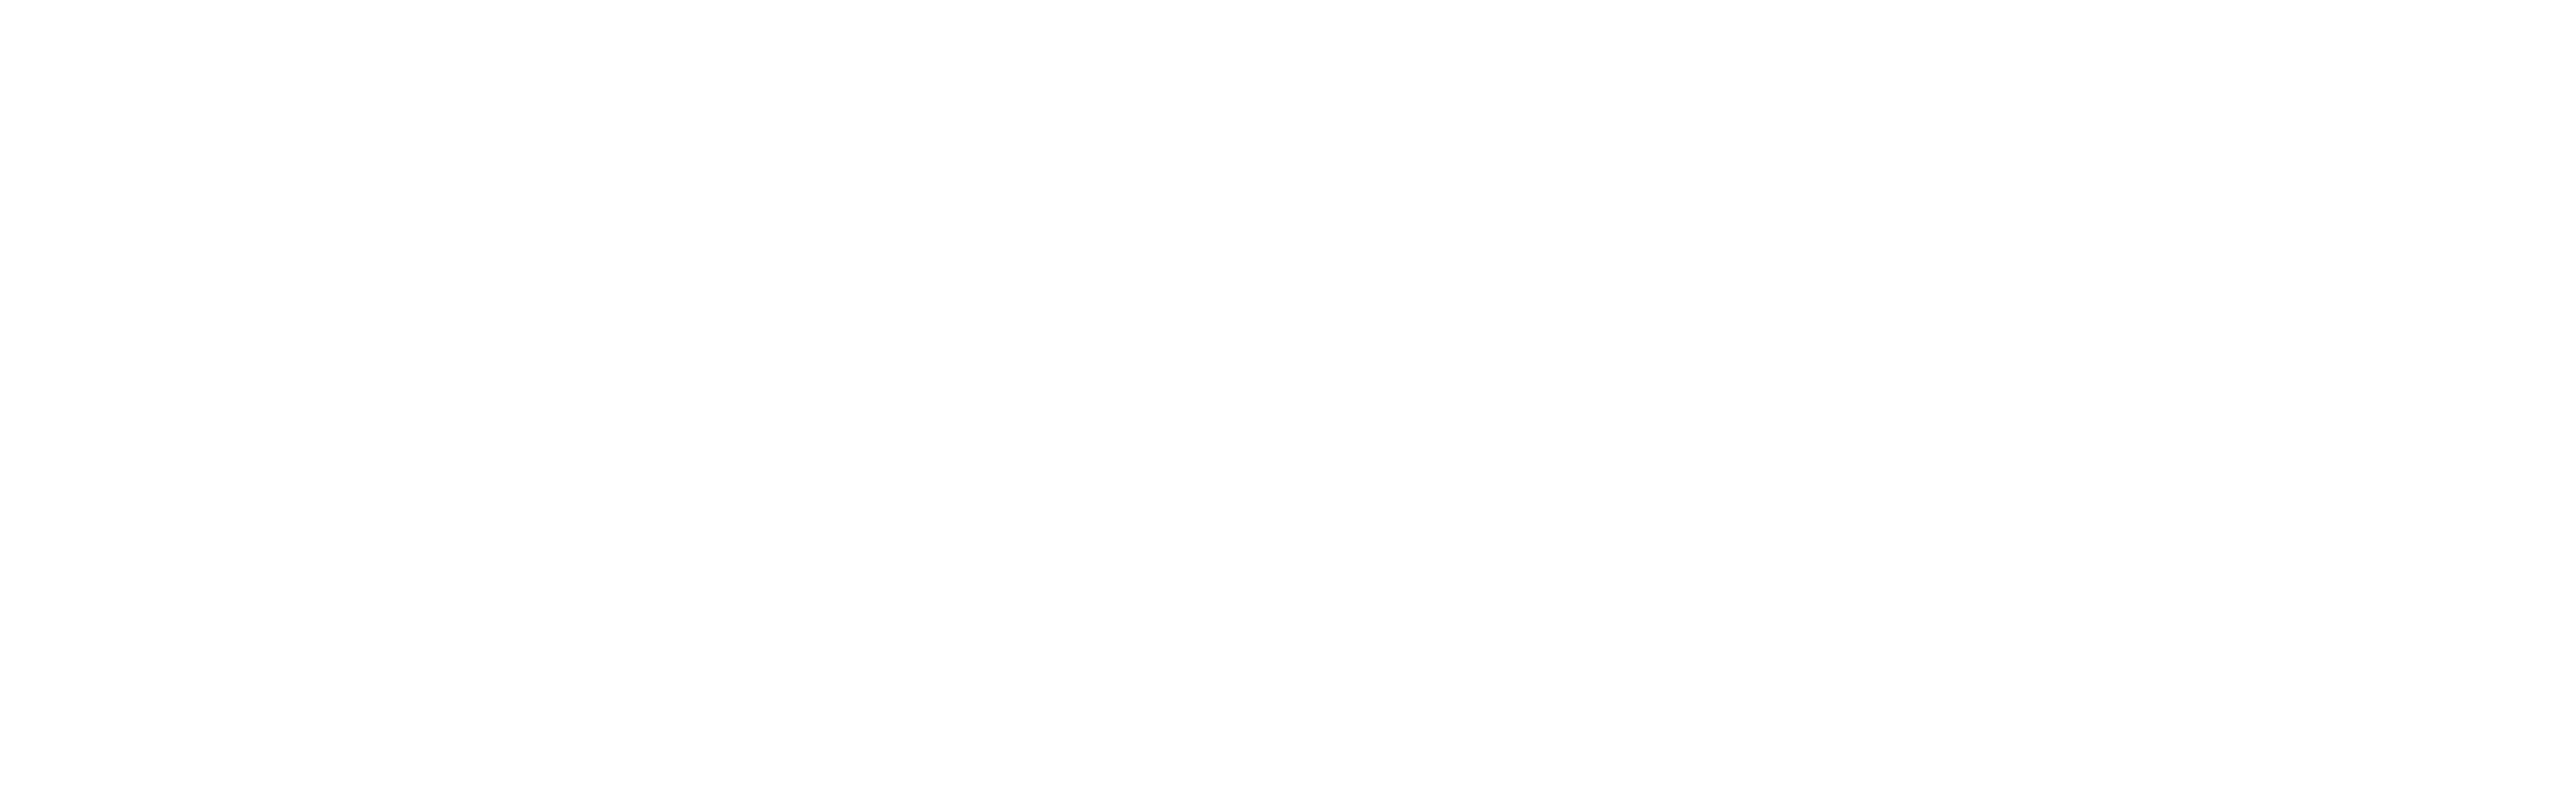 primus home care logo